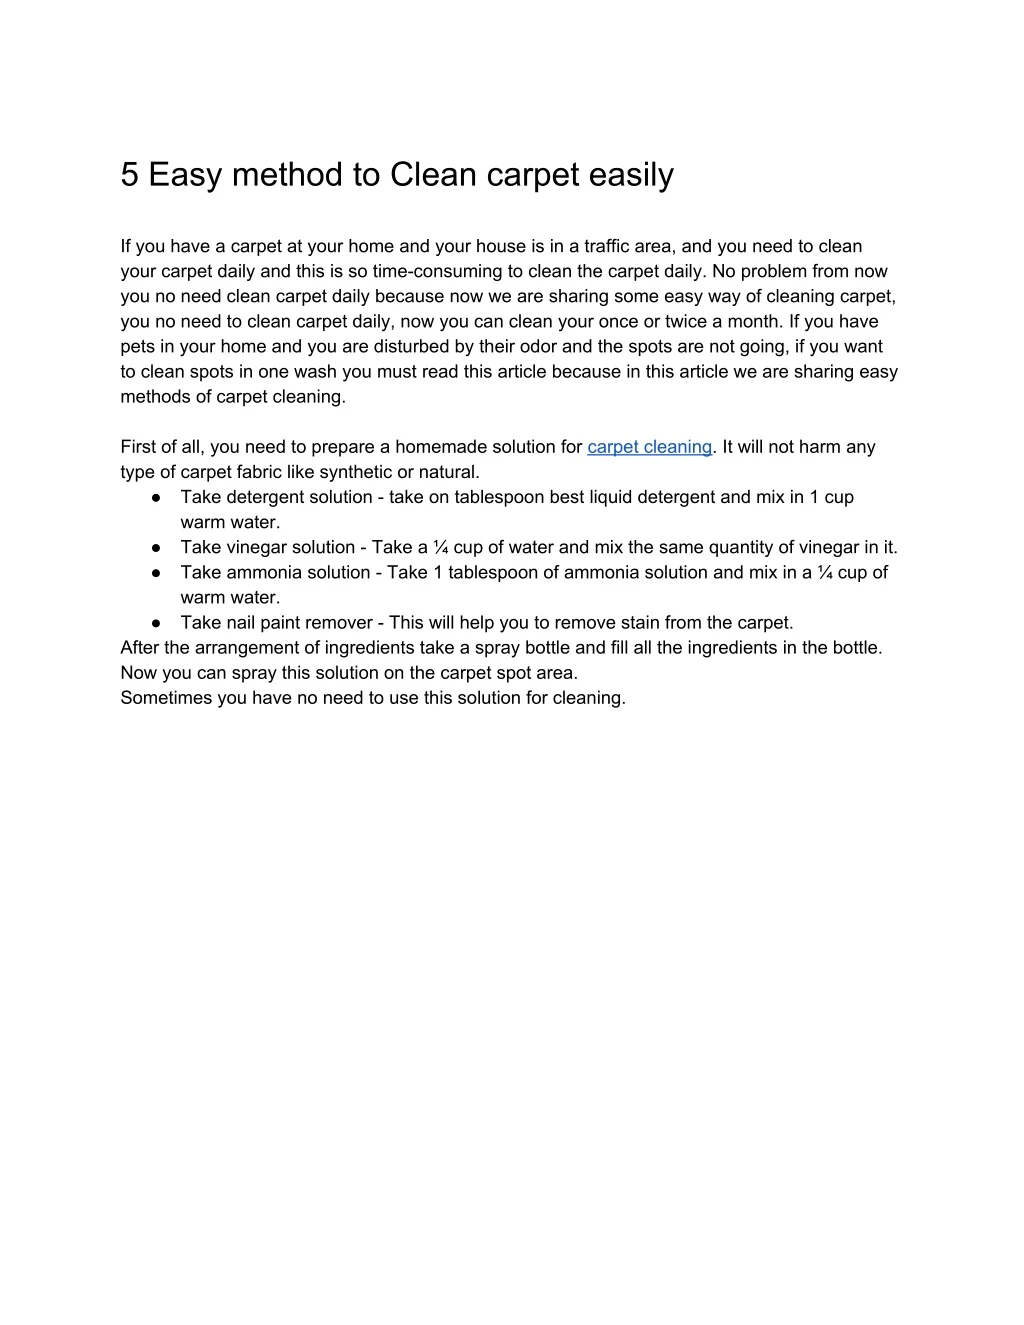 5 easy method to clean carpet easily